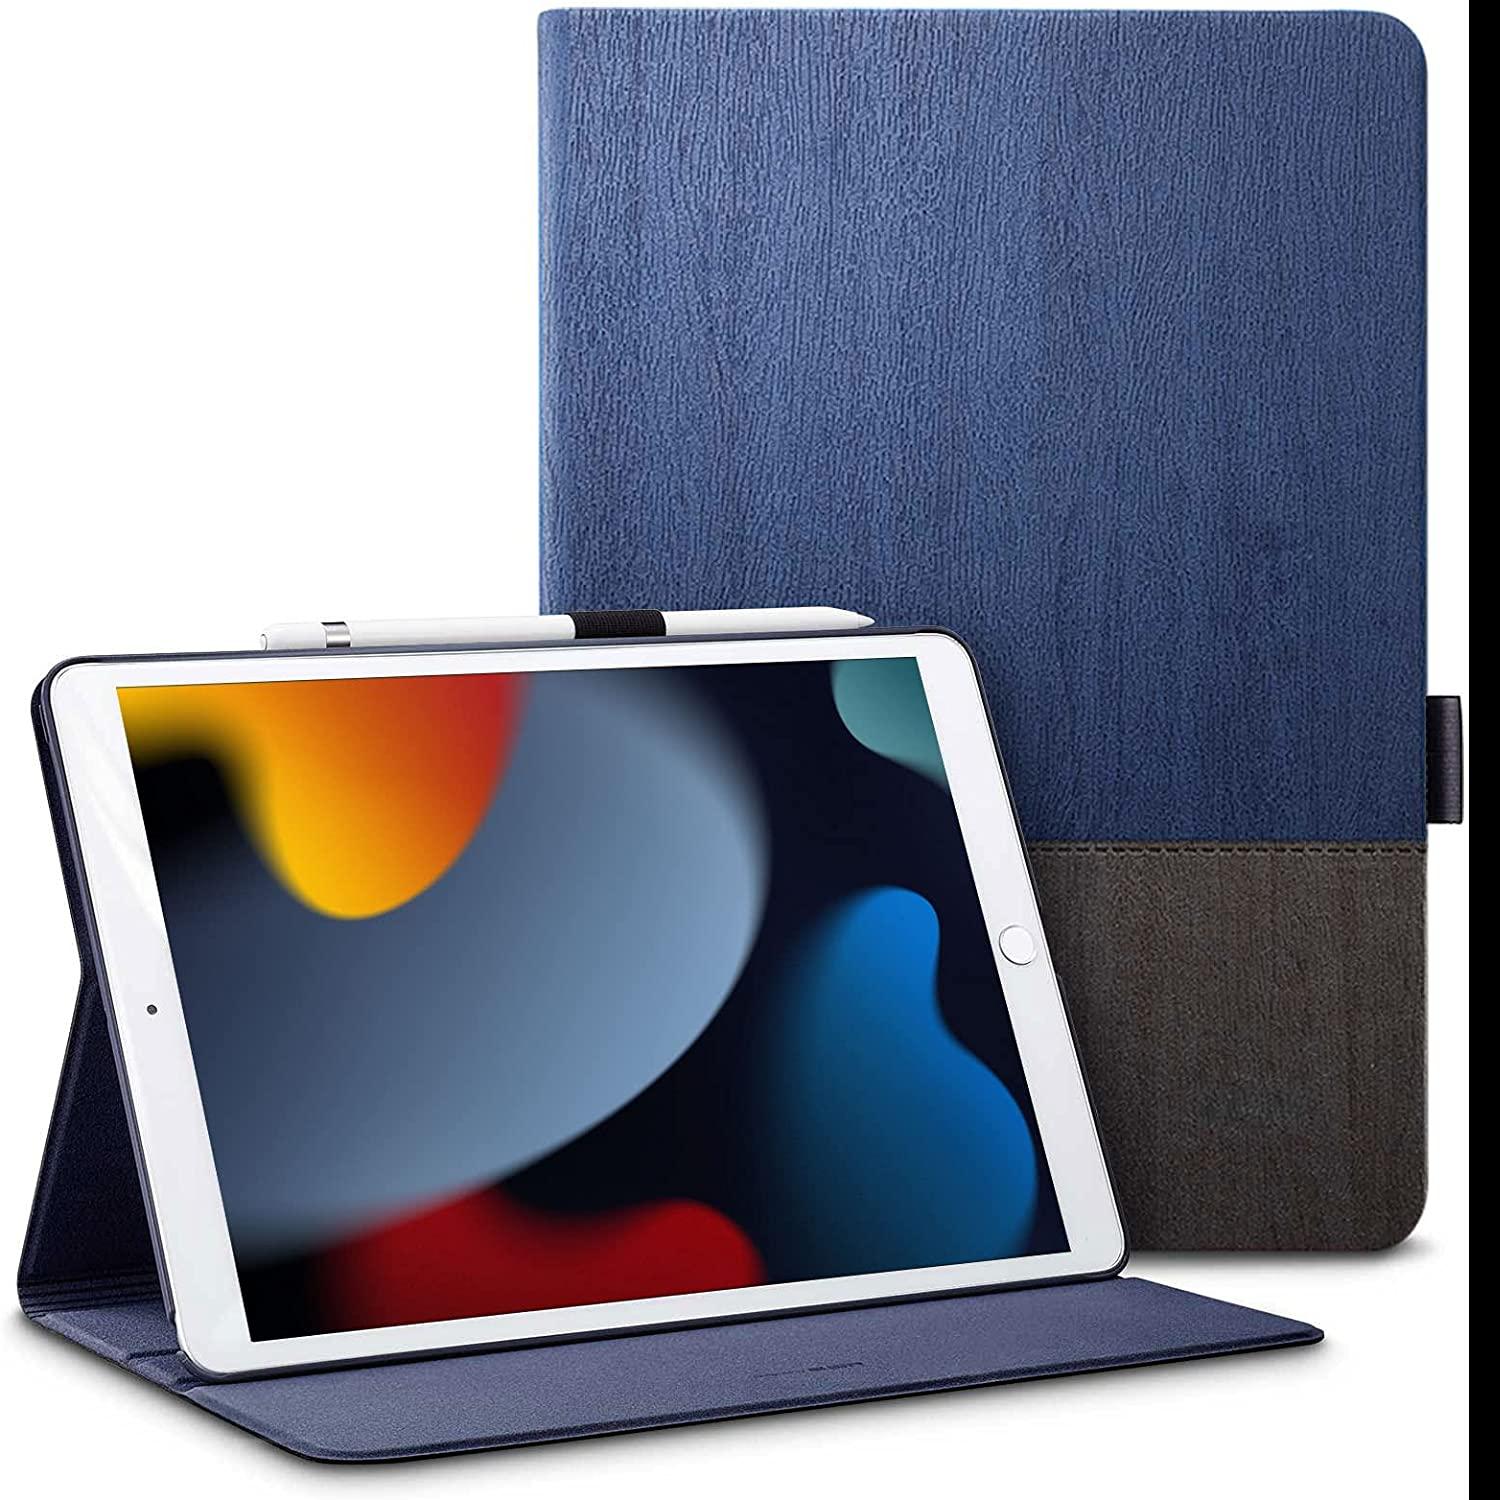 iPad ESR Folio Cover Case for $5.99